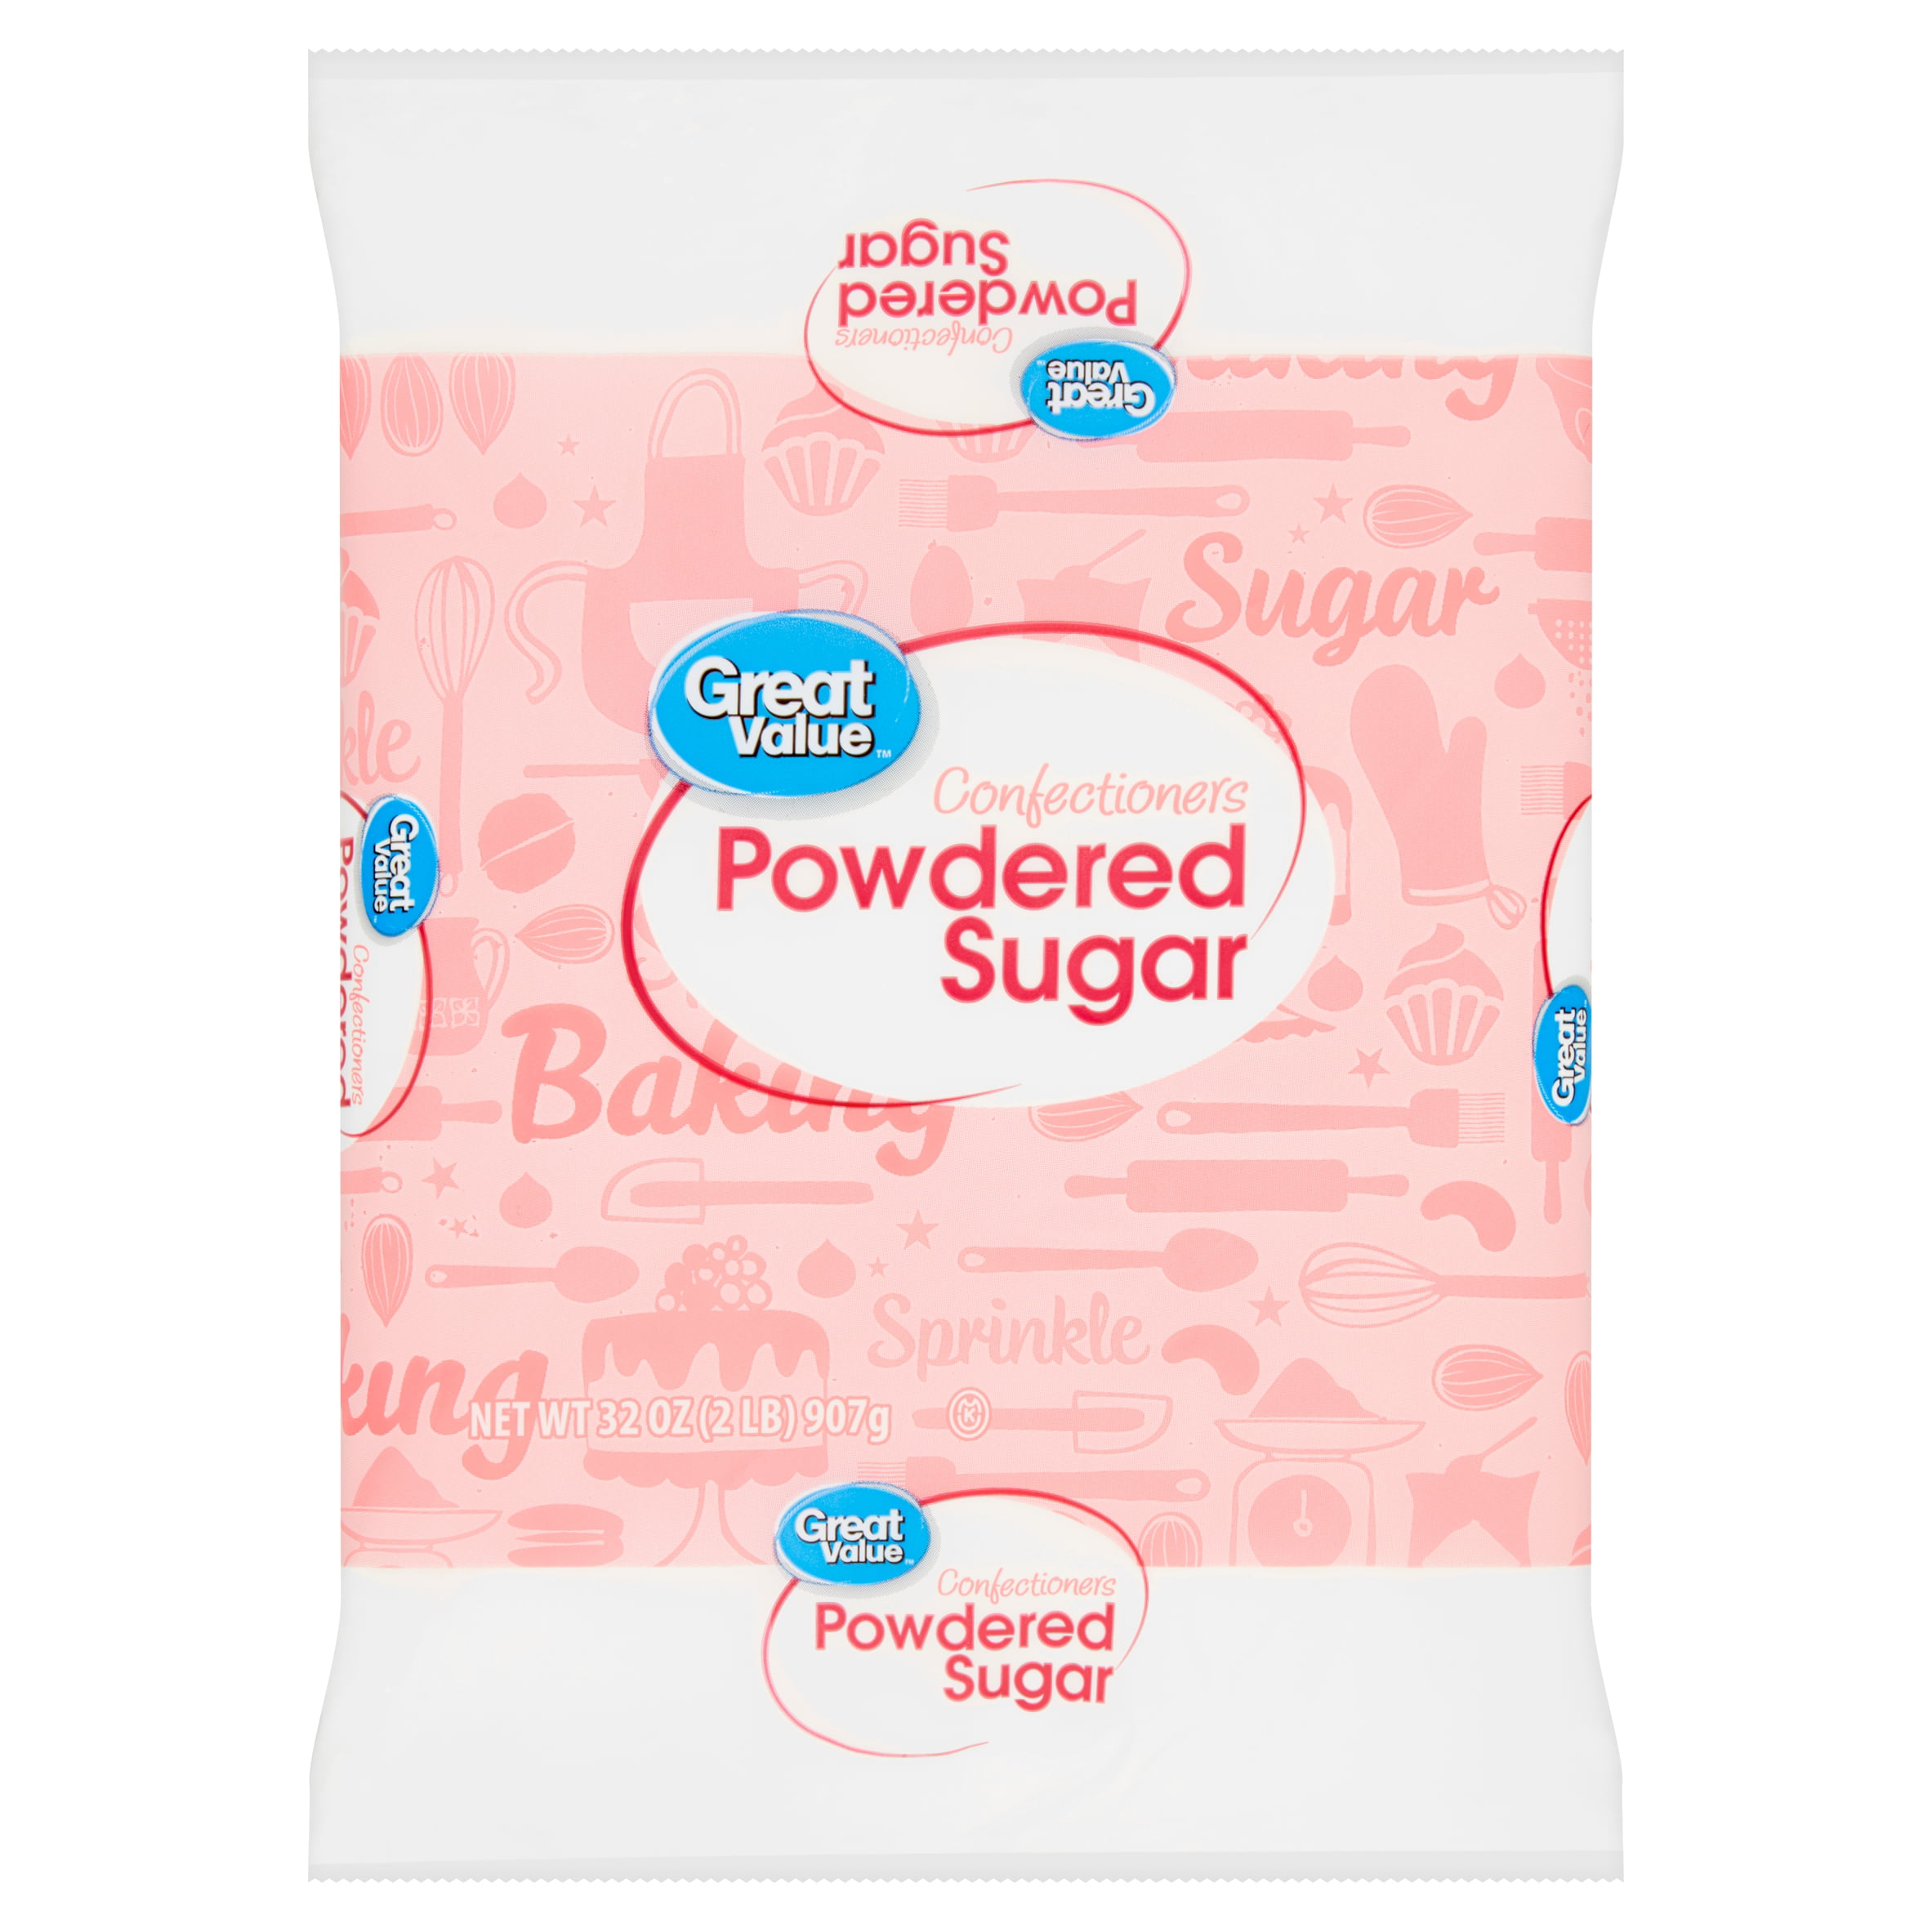 Great Value Confectioners Powdered Sugar 32 Oz